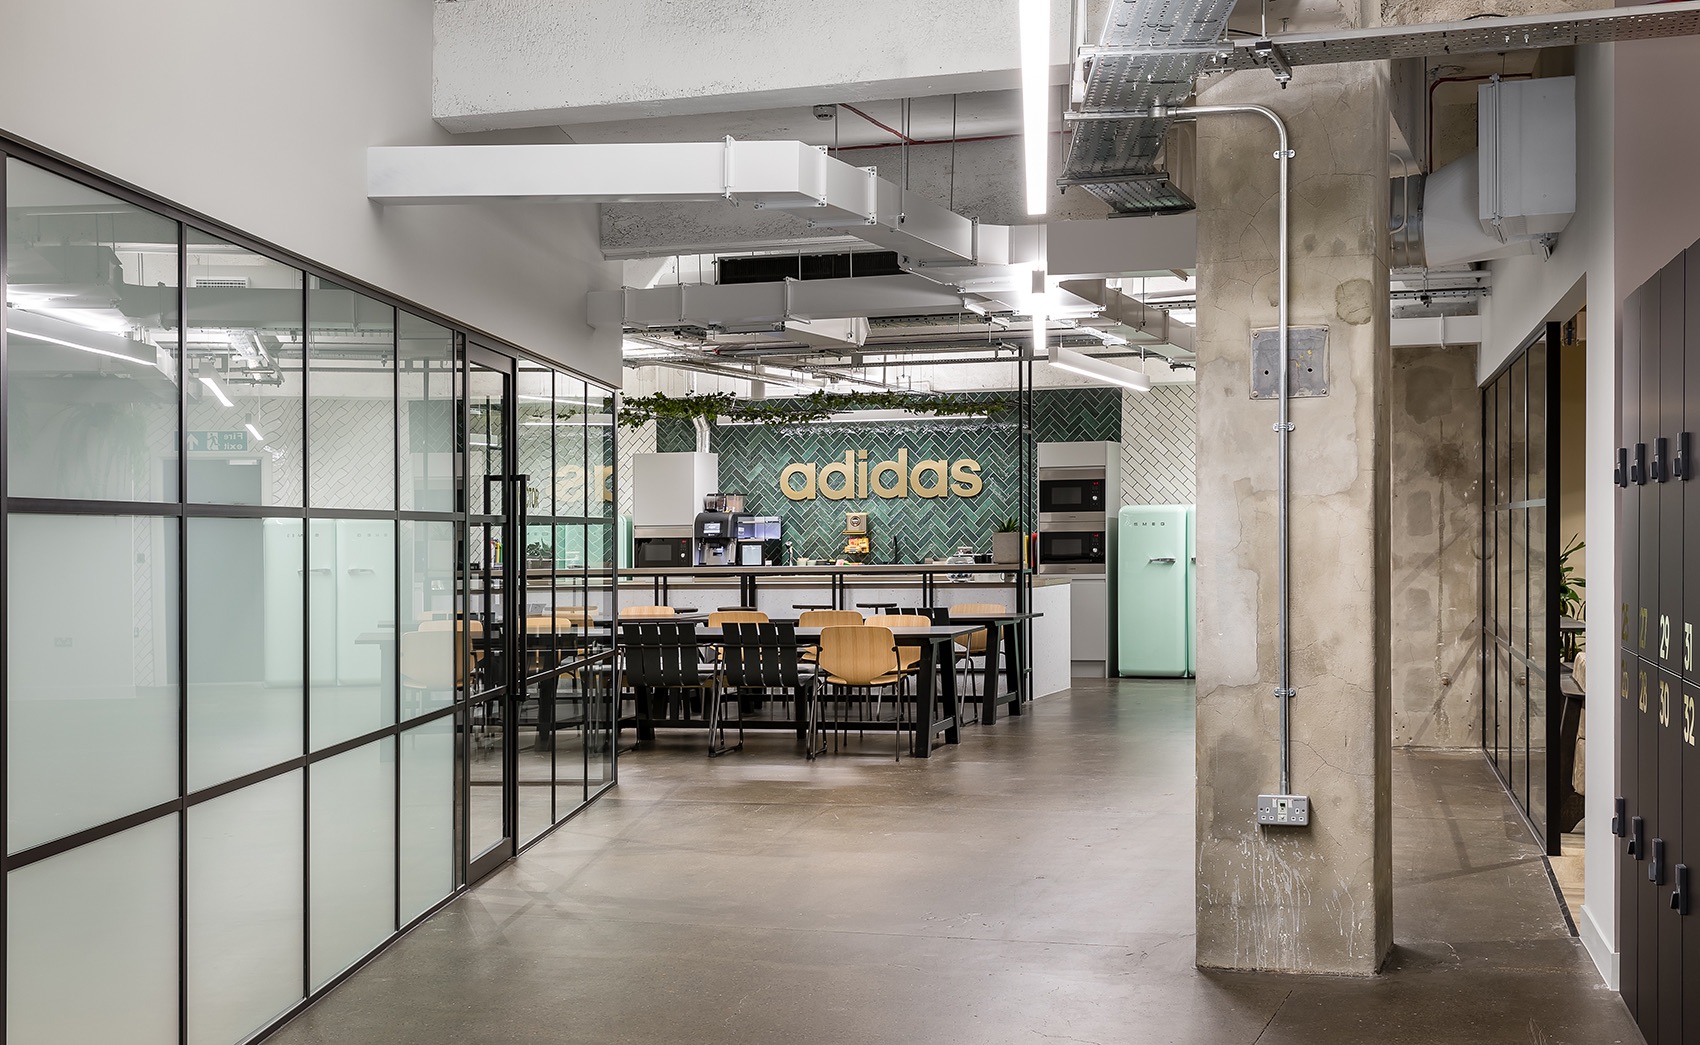 A Look Inside Adidas' Office -